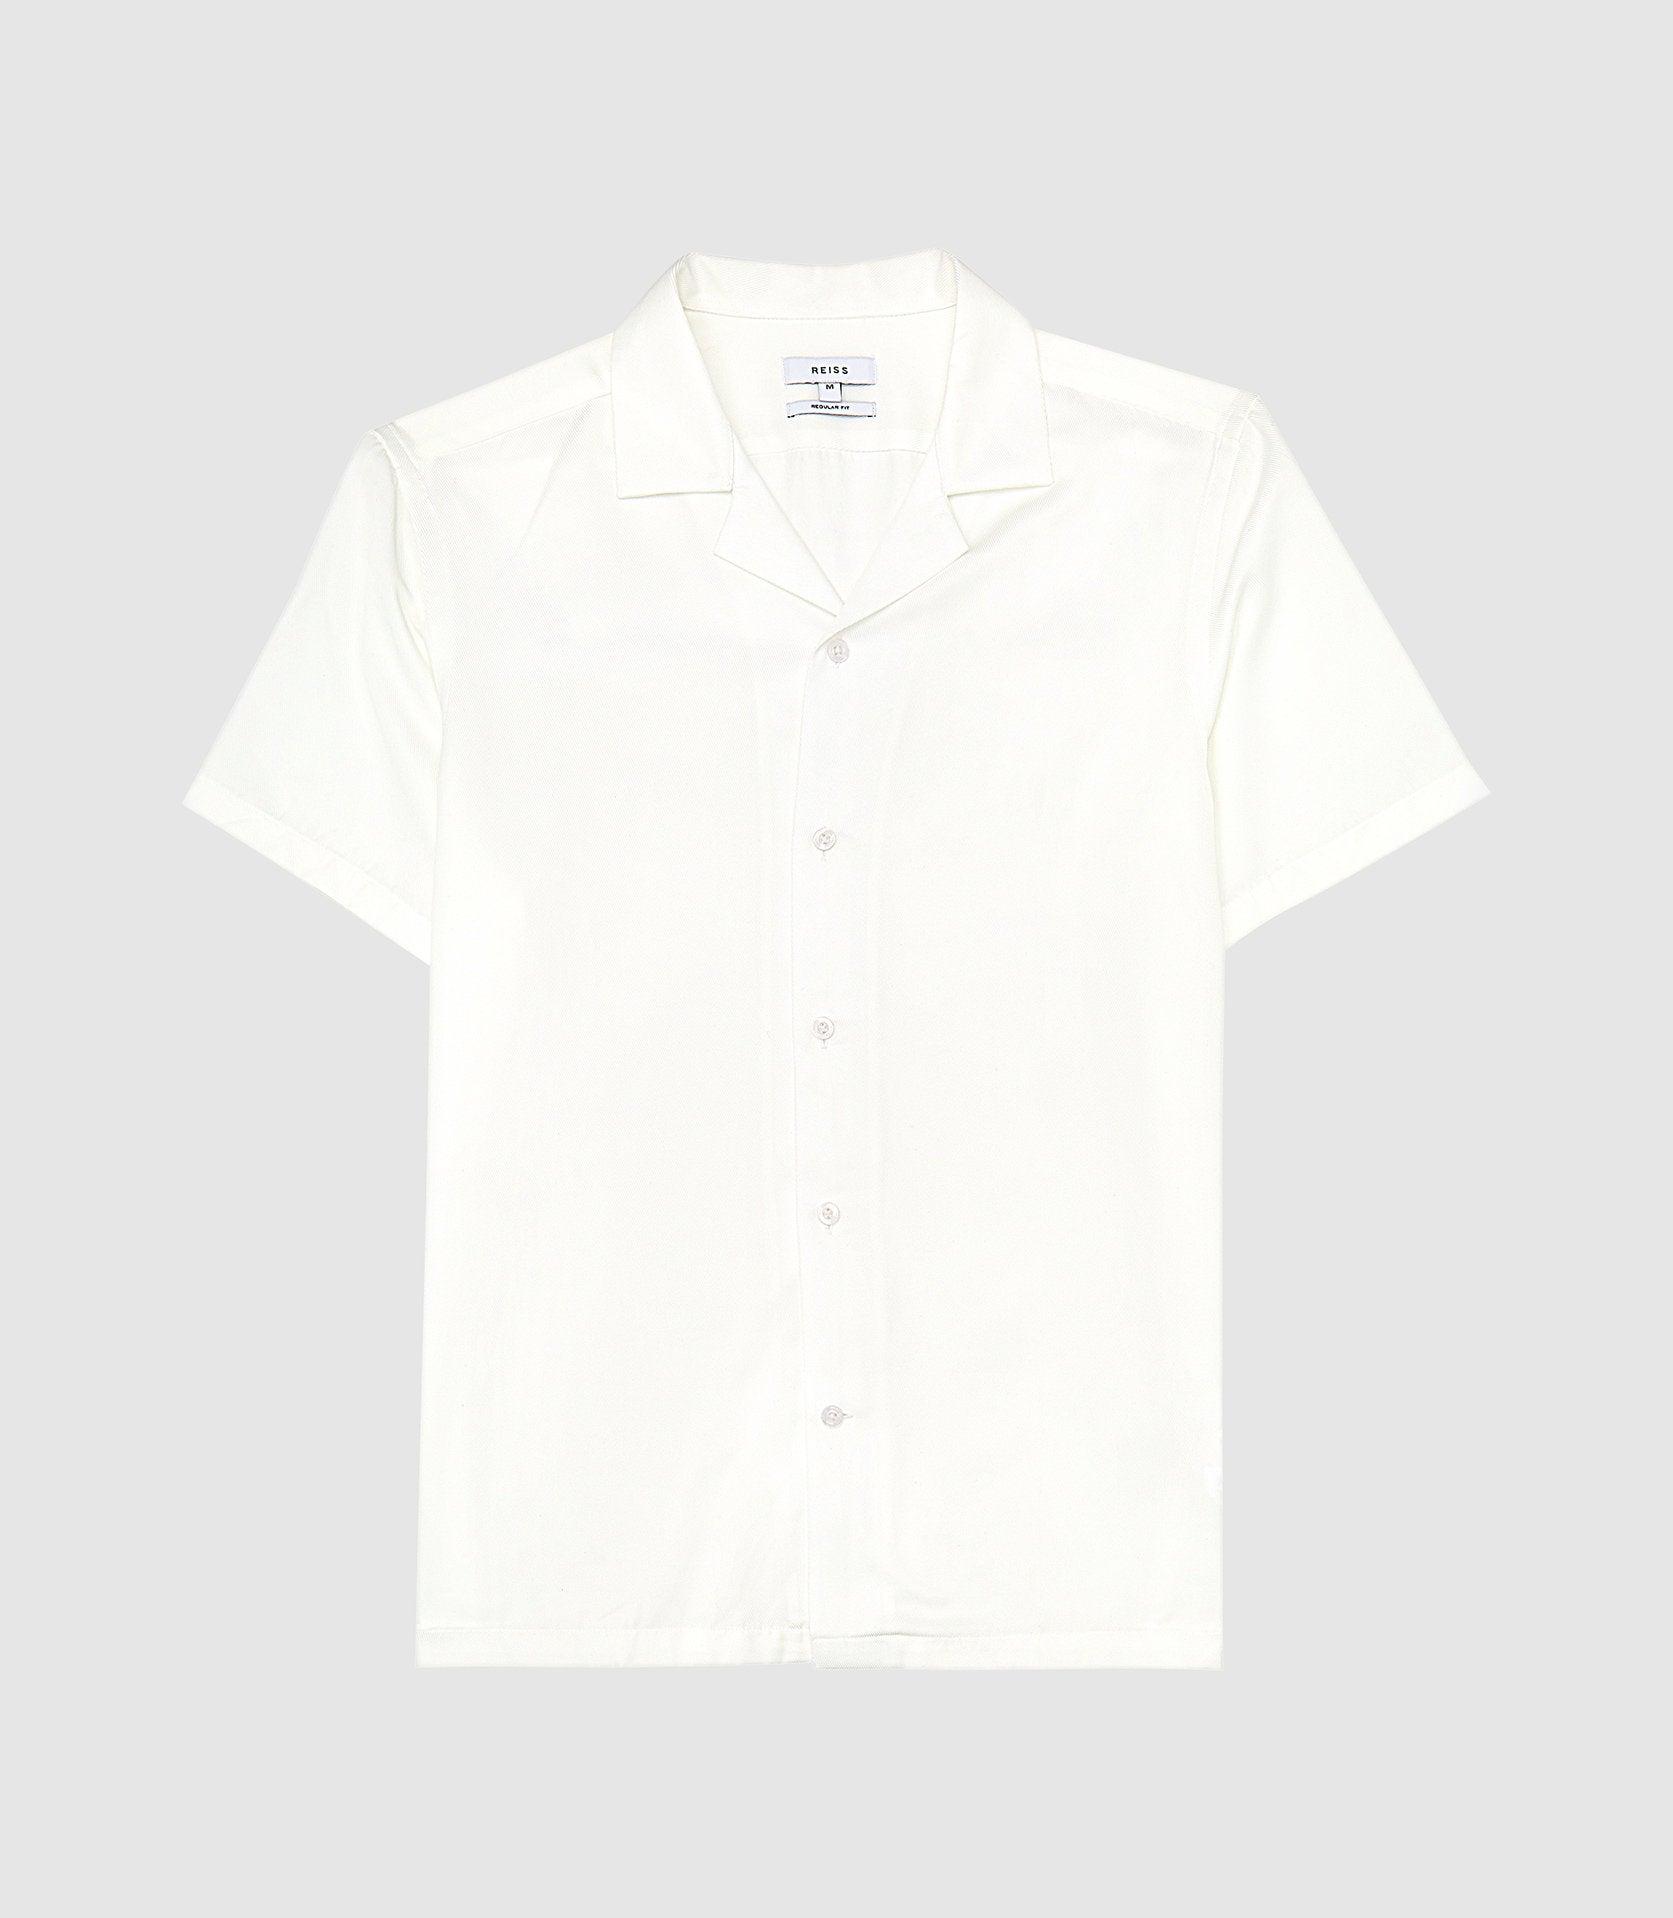 Reiss Cuban Collar Shirt in White for Men - Lyst